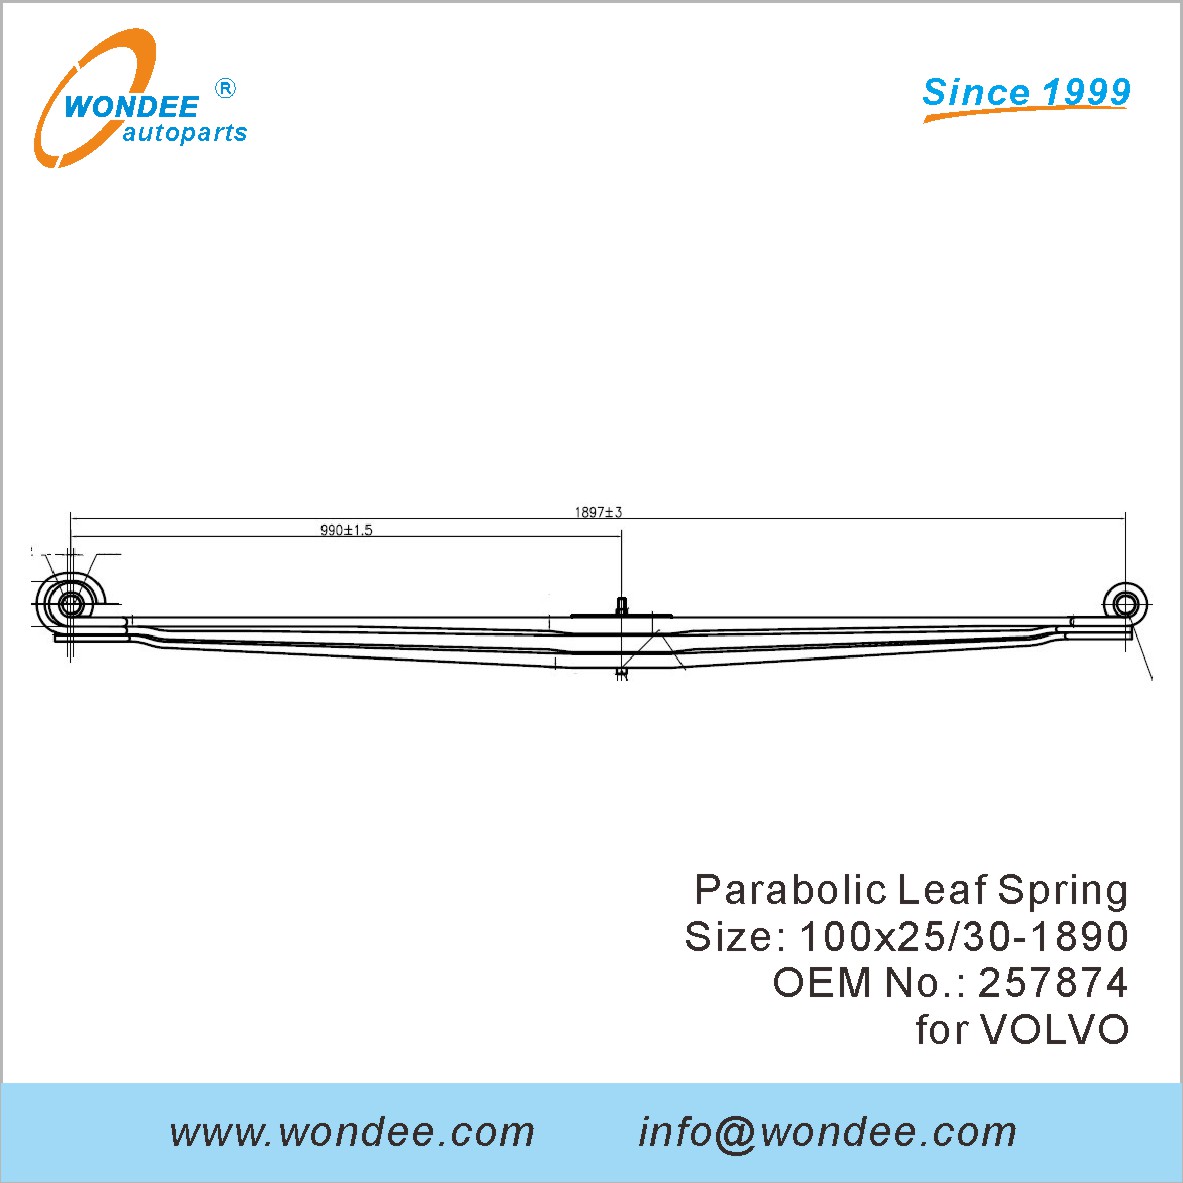 WONDEE heavy duty parabolic Leaf Spring OEM 257874 for VOLVO